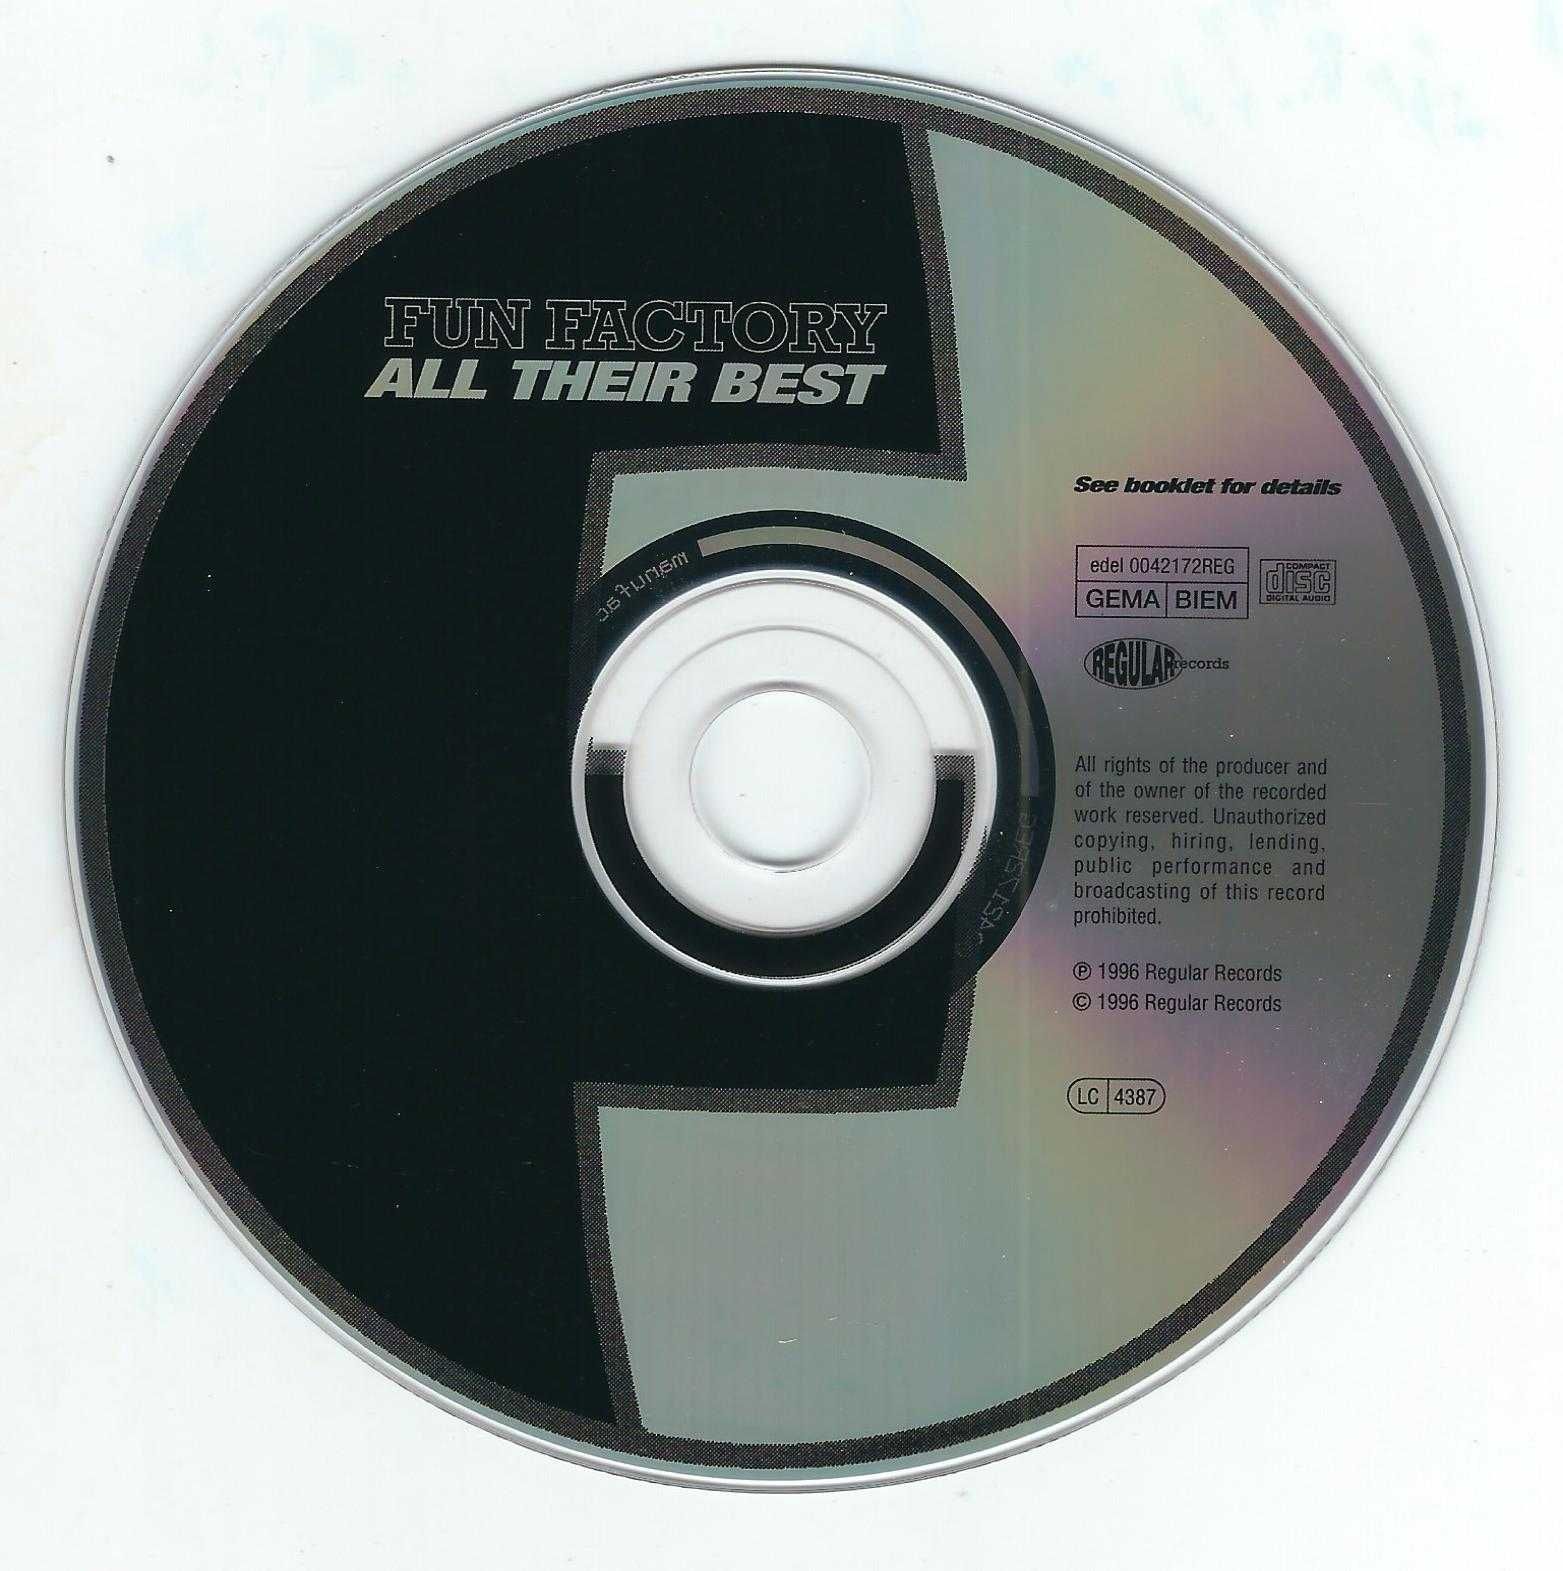 CD Fun Factory - All Their Best (1996) (Regular Records)